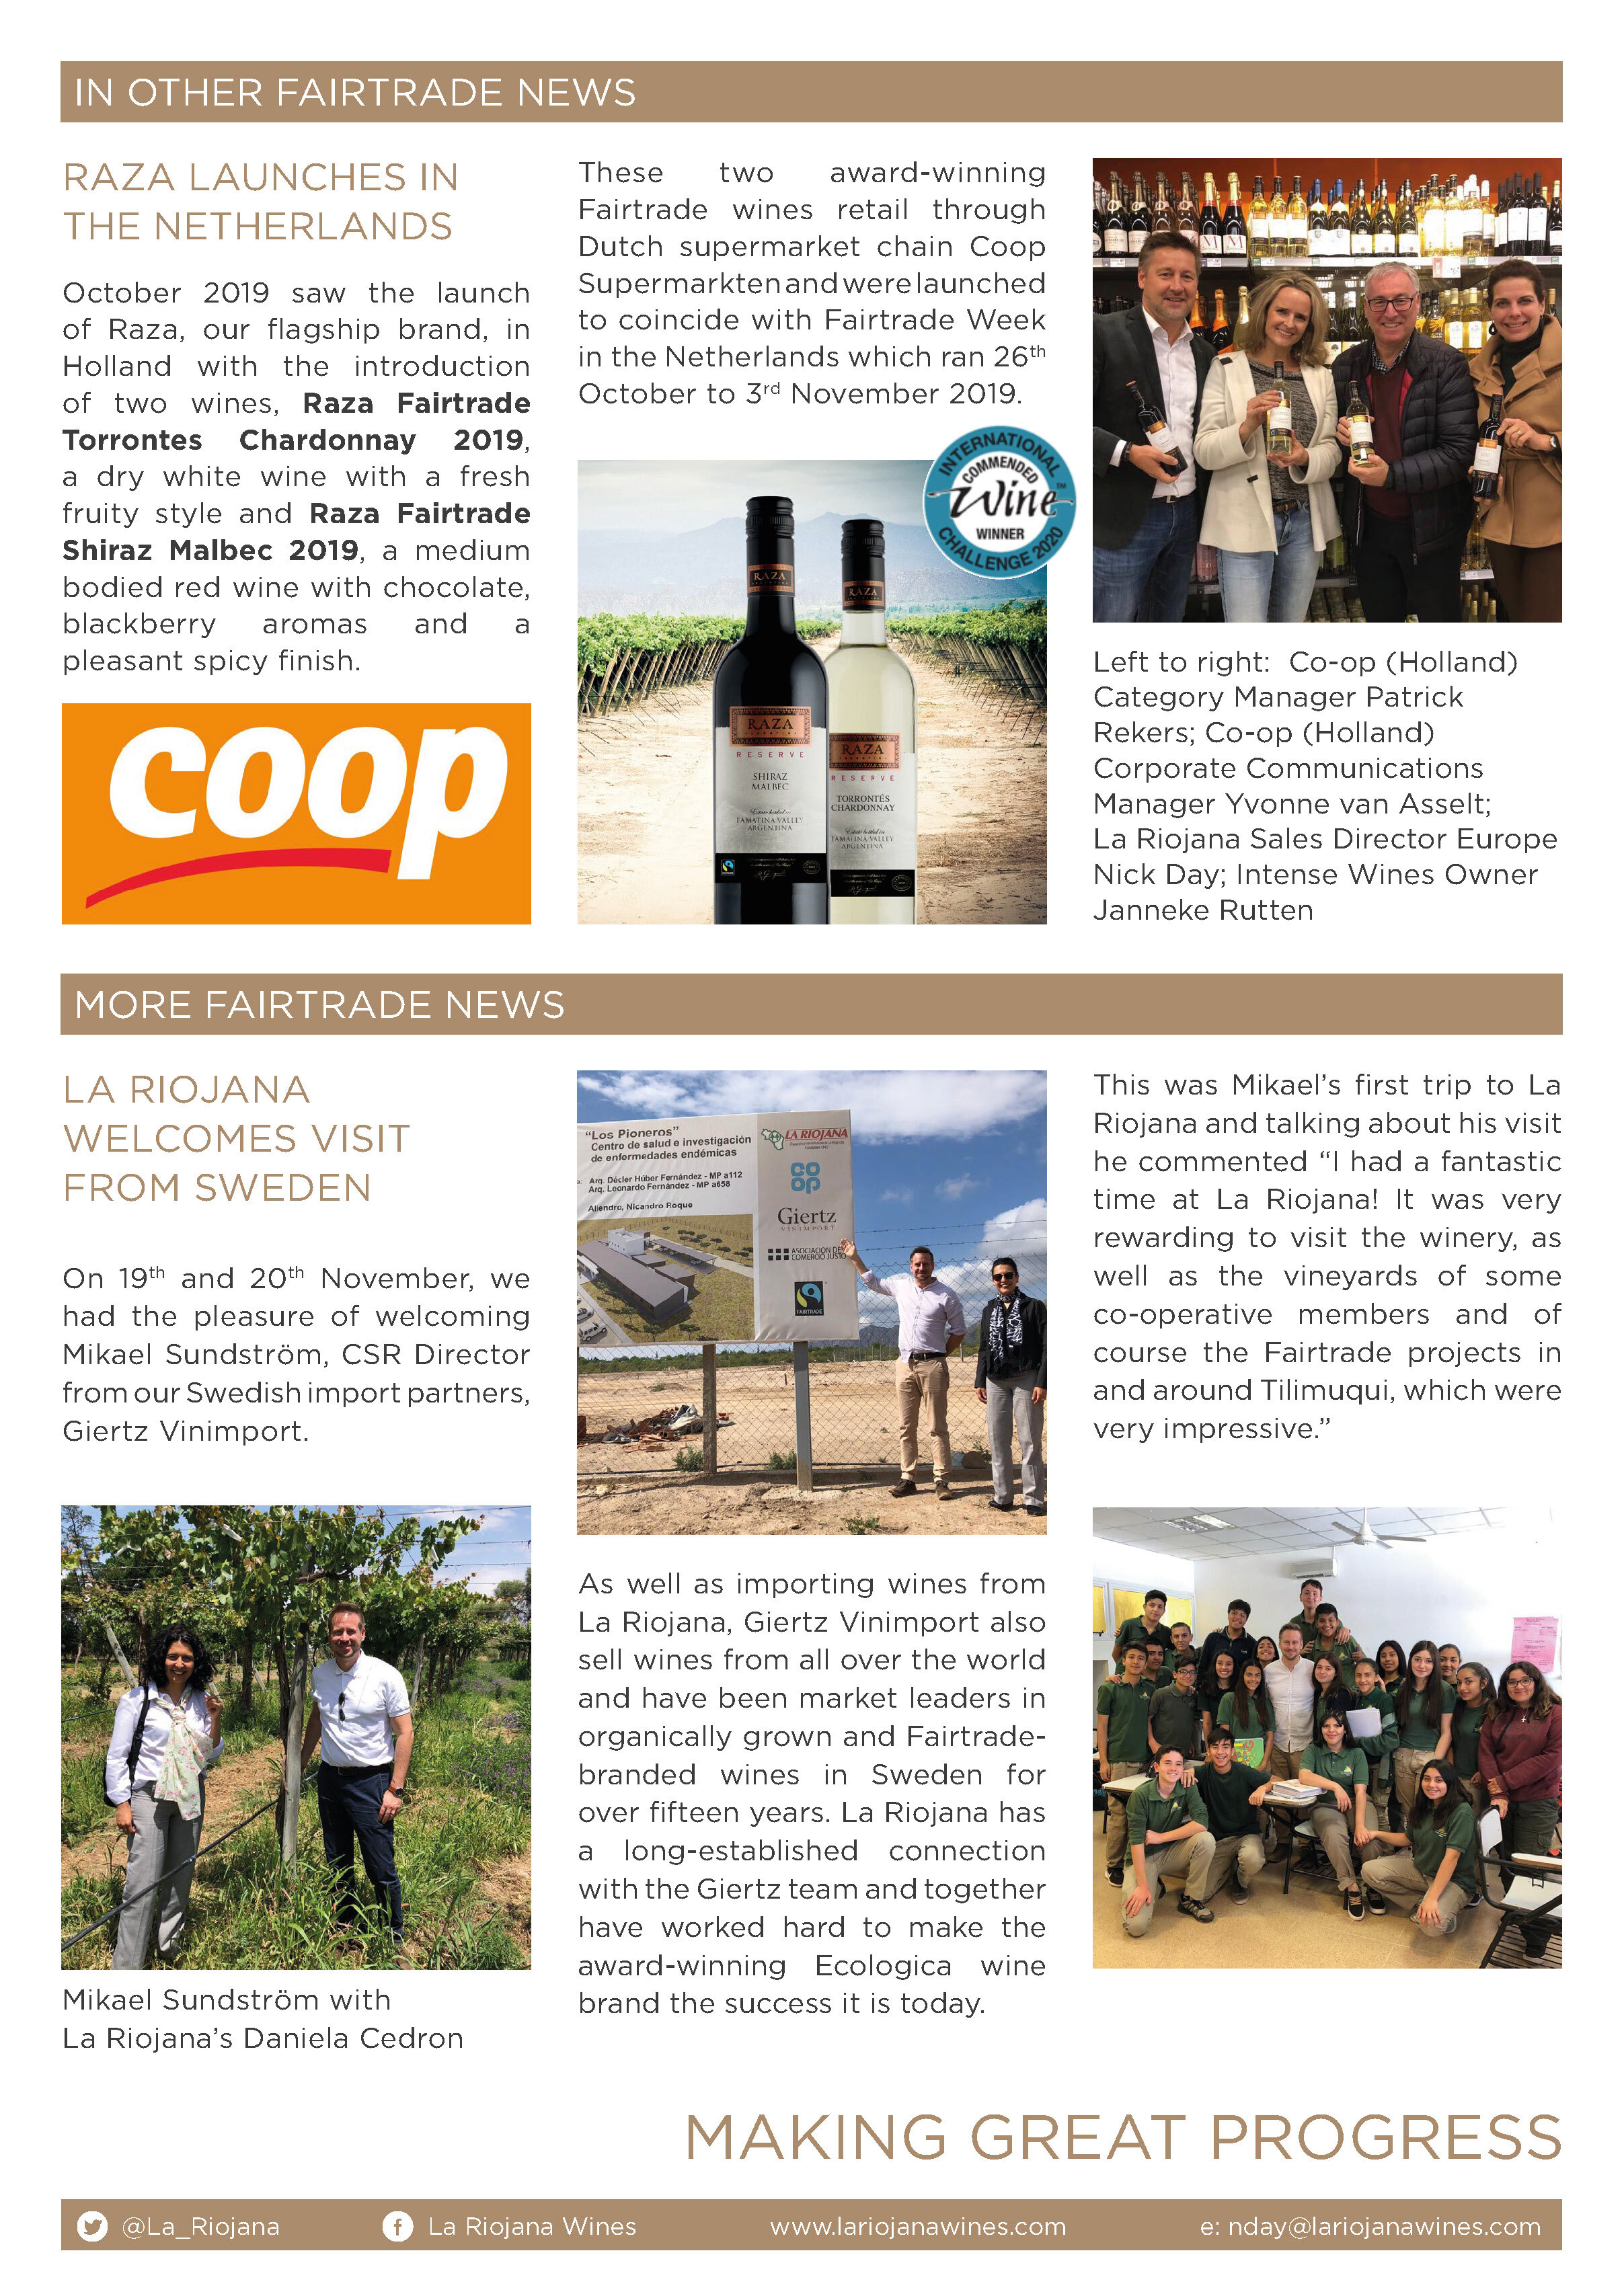 La Riojana - Fairtrade Project News - November 2019_Page_4.jpg